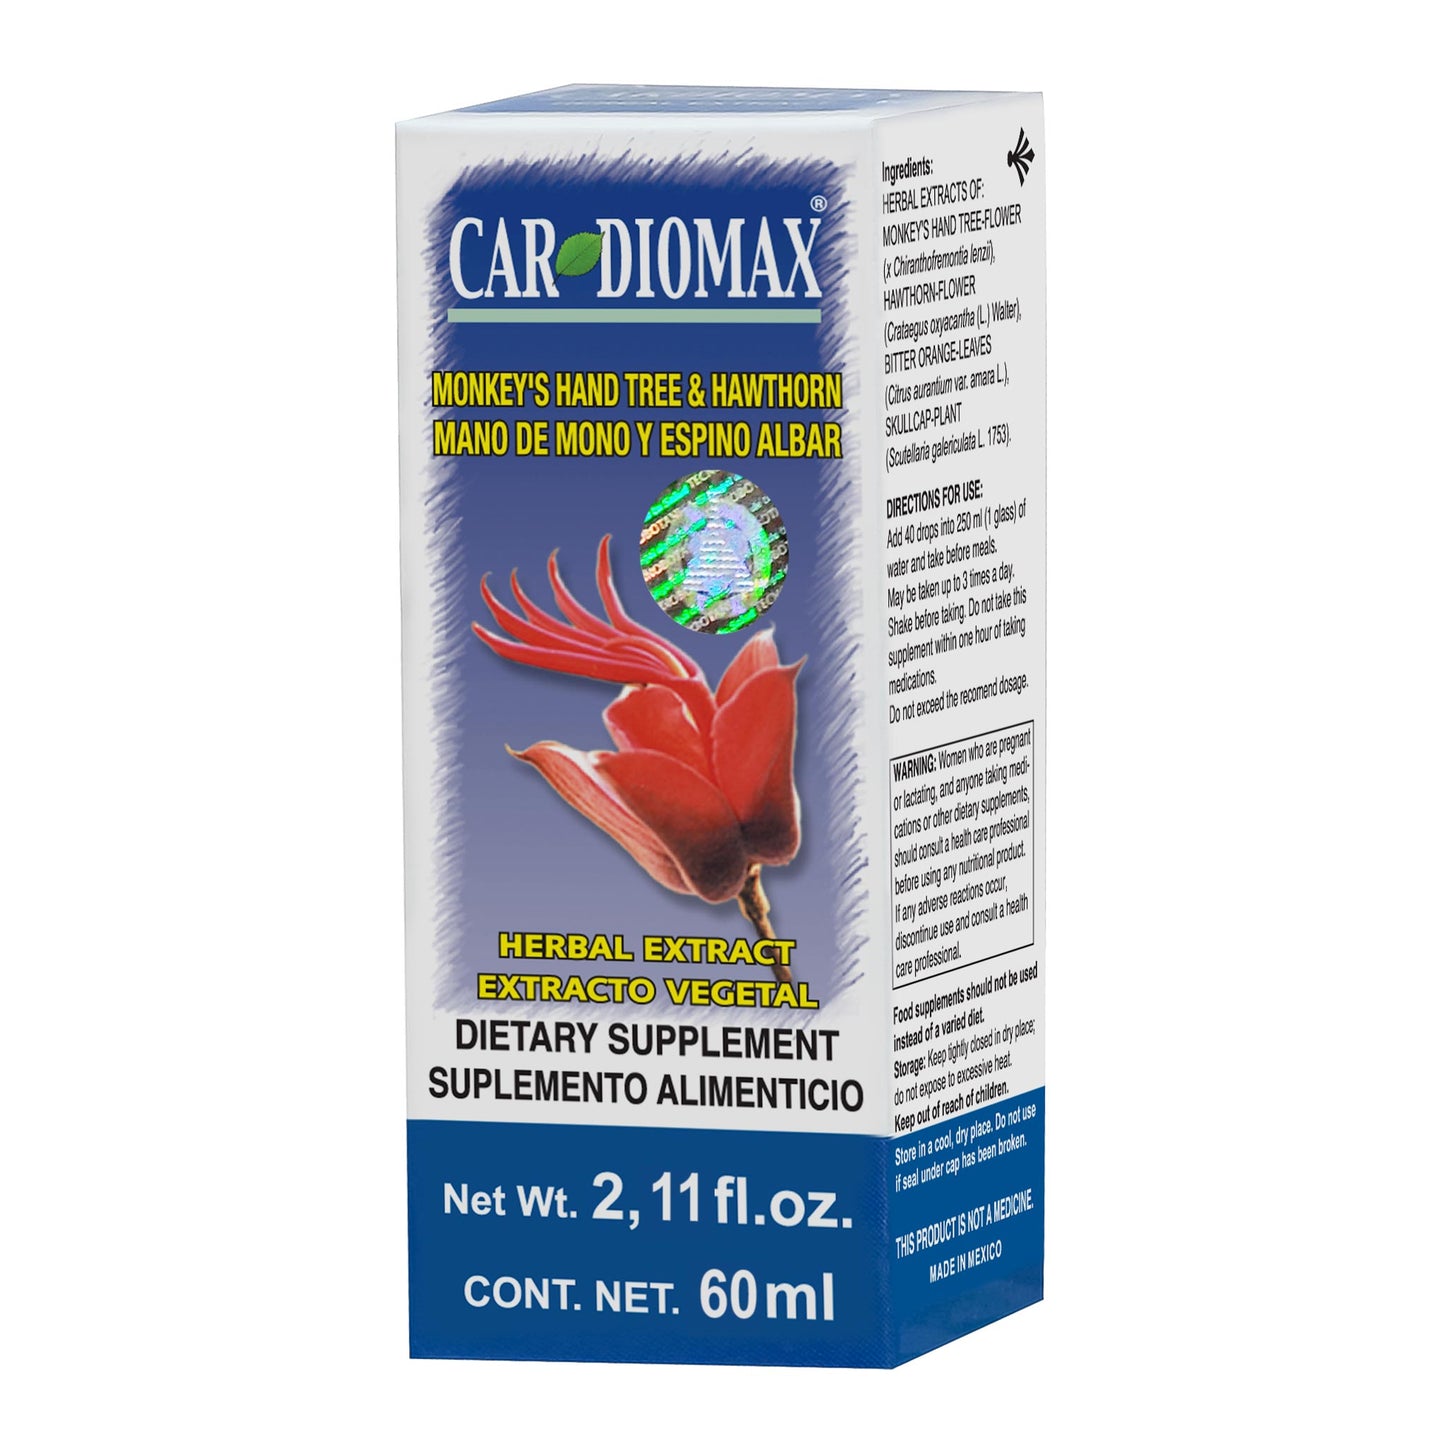 Extracto vegetal CARDIOMAX ® mano de mono y espino albar caja frasco gotero con 60ml